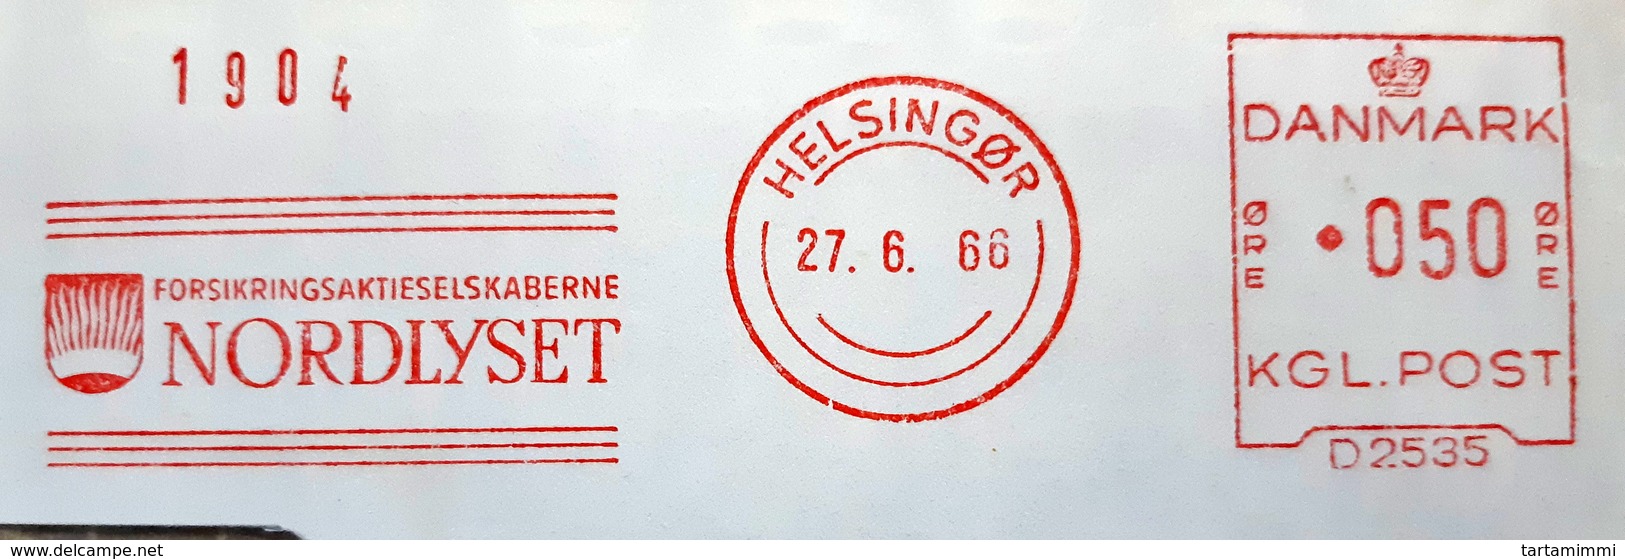 EMA AFS METER STAMP FREISTEMPEL - DANMARK HELSINGØR 1966 NORDLYSET SUNSHINE SUNSET SUN SOLEIL - Frankeermachines (EMA)